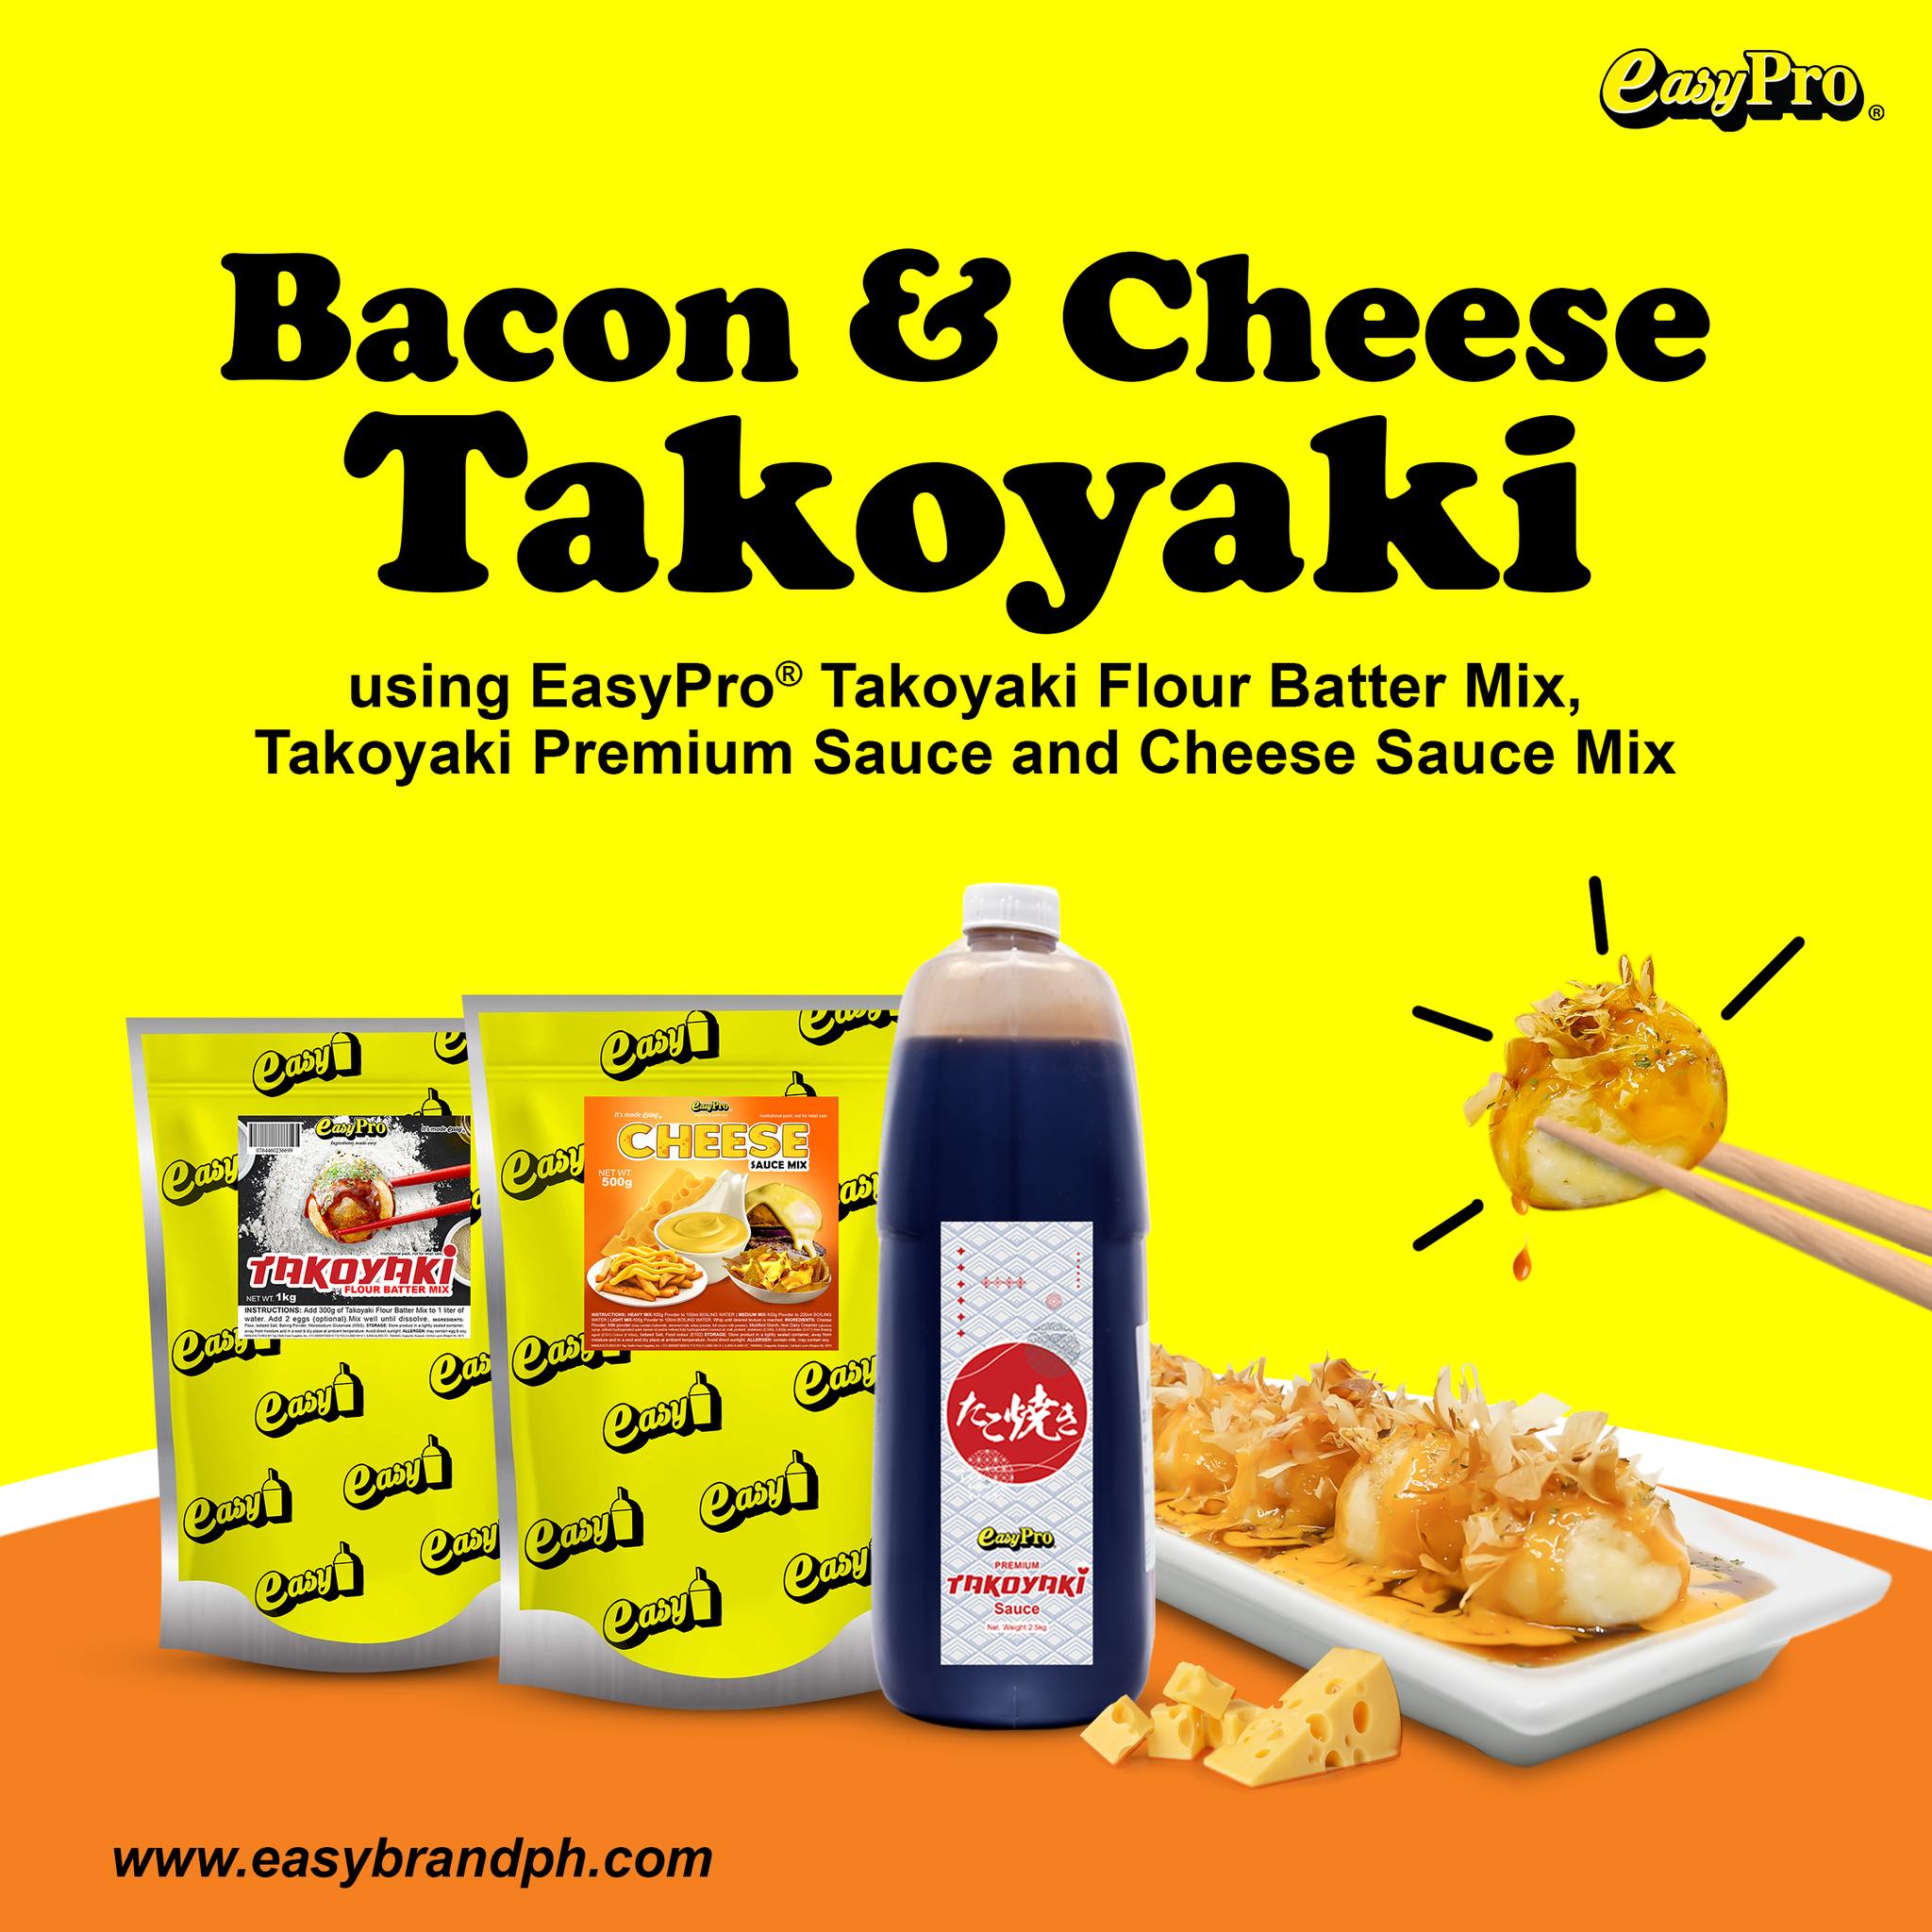 Bacon & Cheese Takoyaki